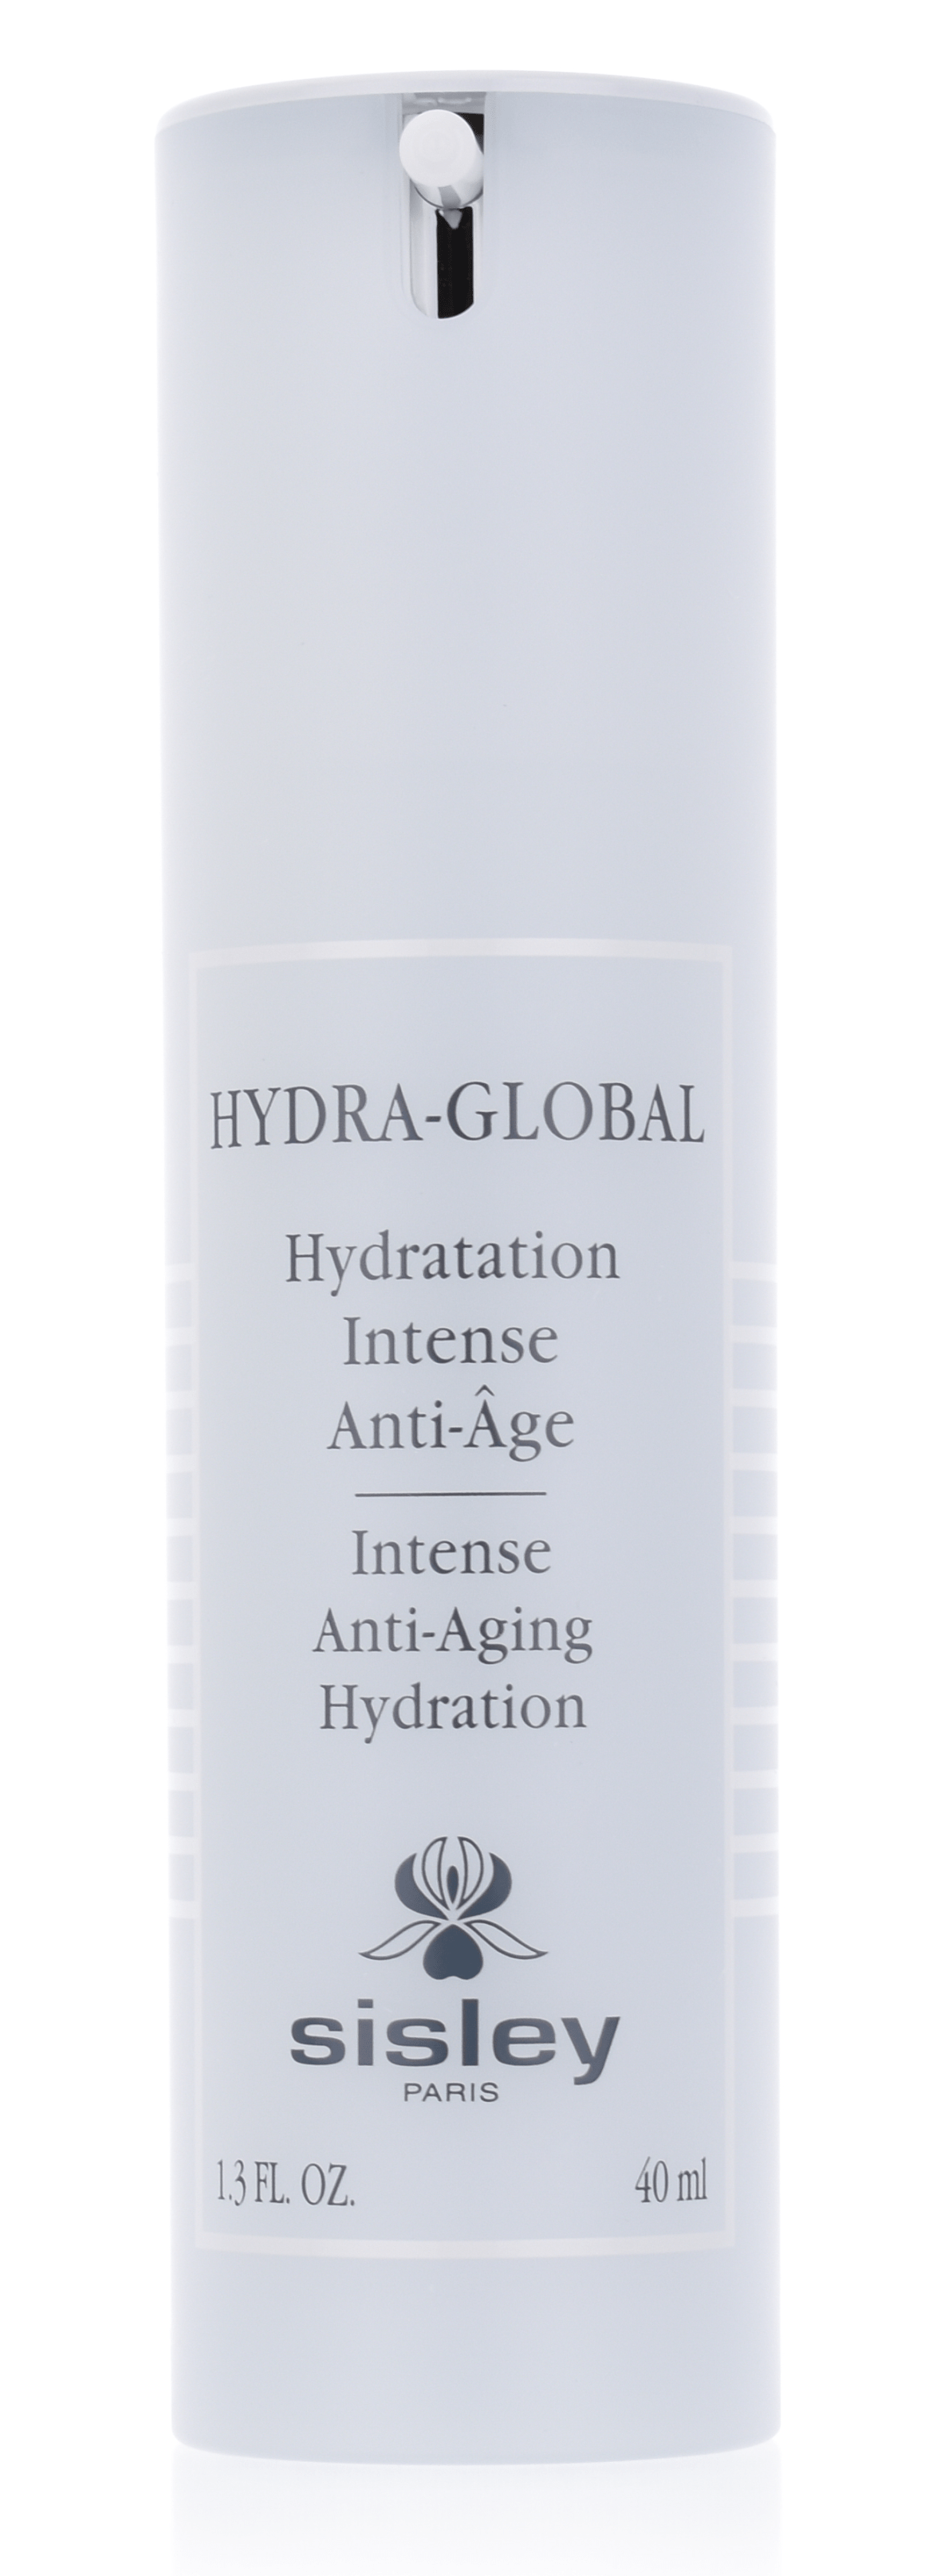 Sisley Hydra-Global Hydration Intense Anti-Age 40 ml